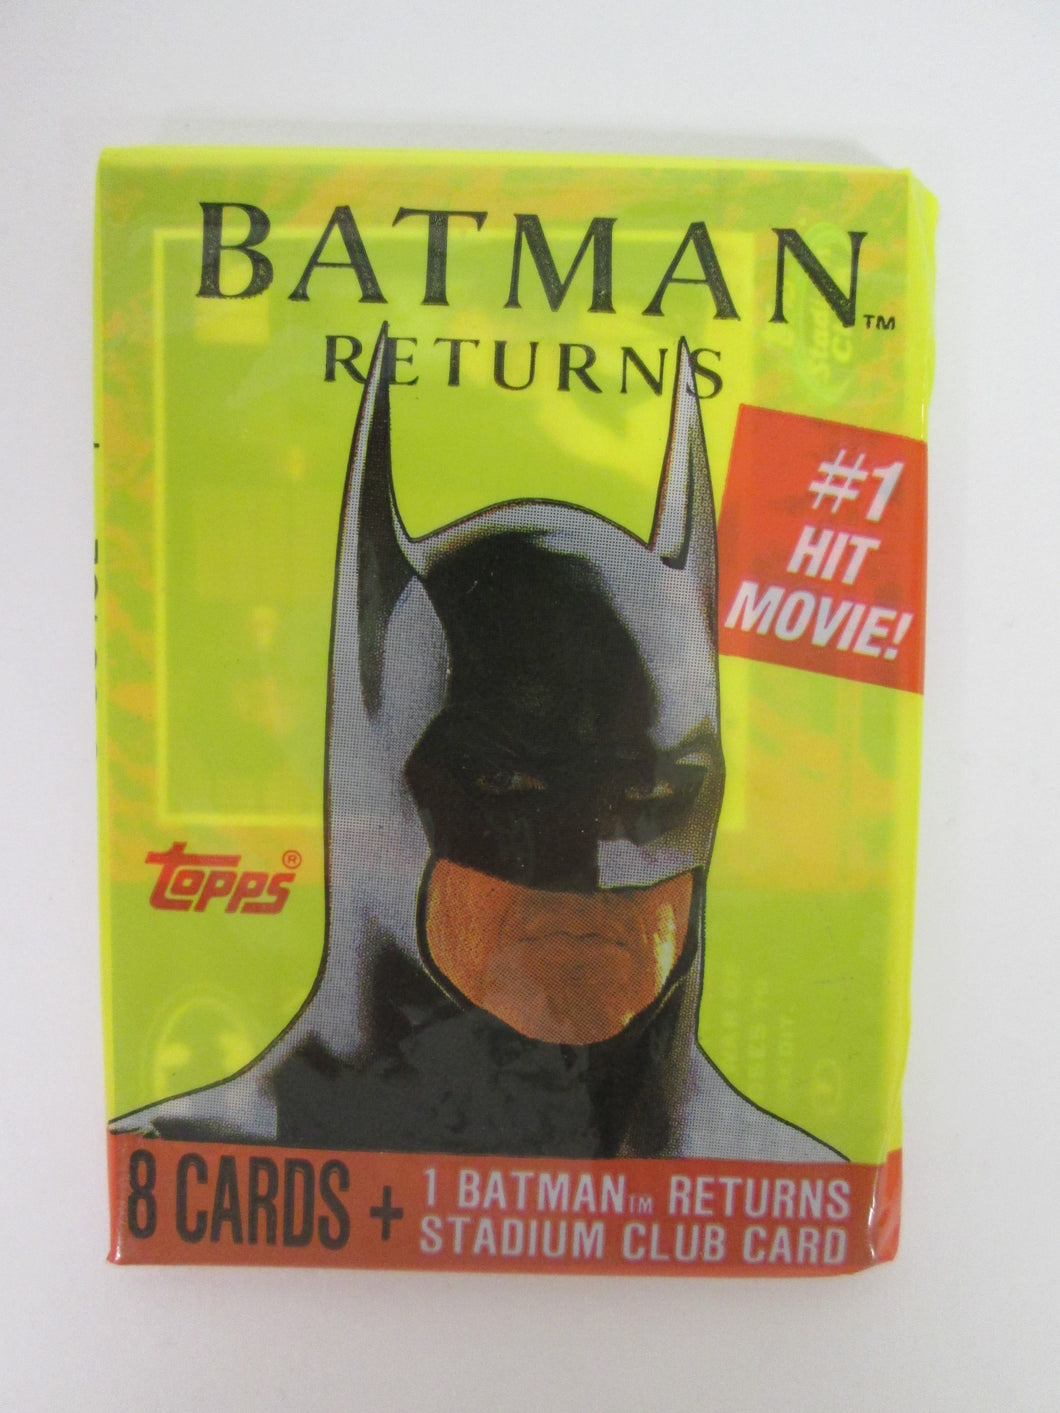 1991 Topps Batman Returns UNOPENED Pack of 8 Trading Cards